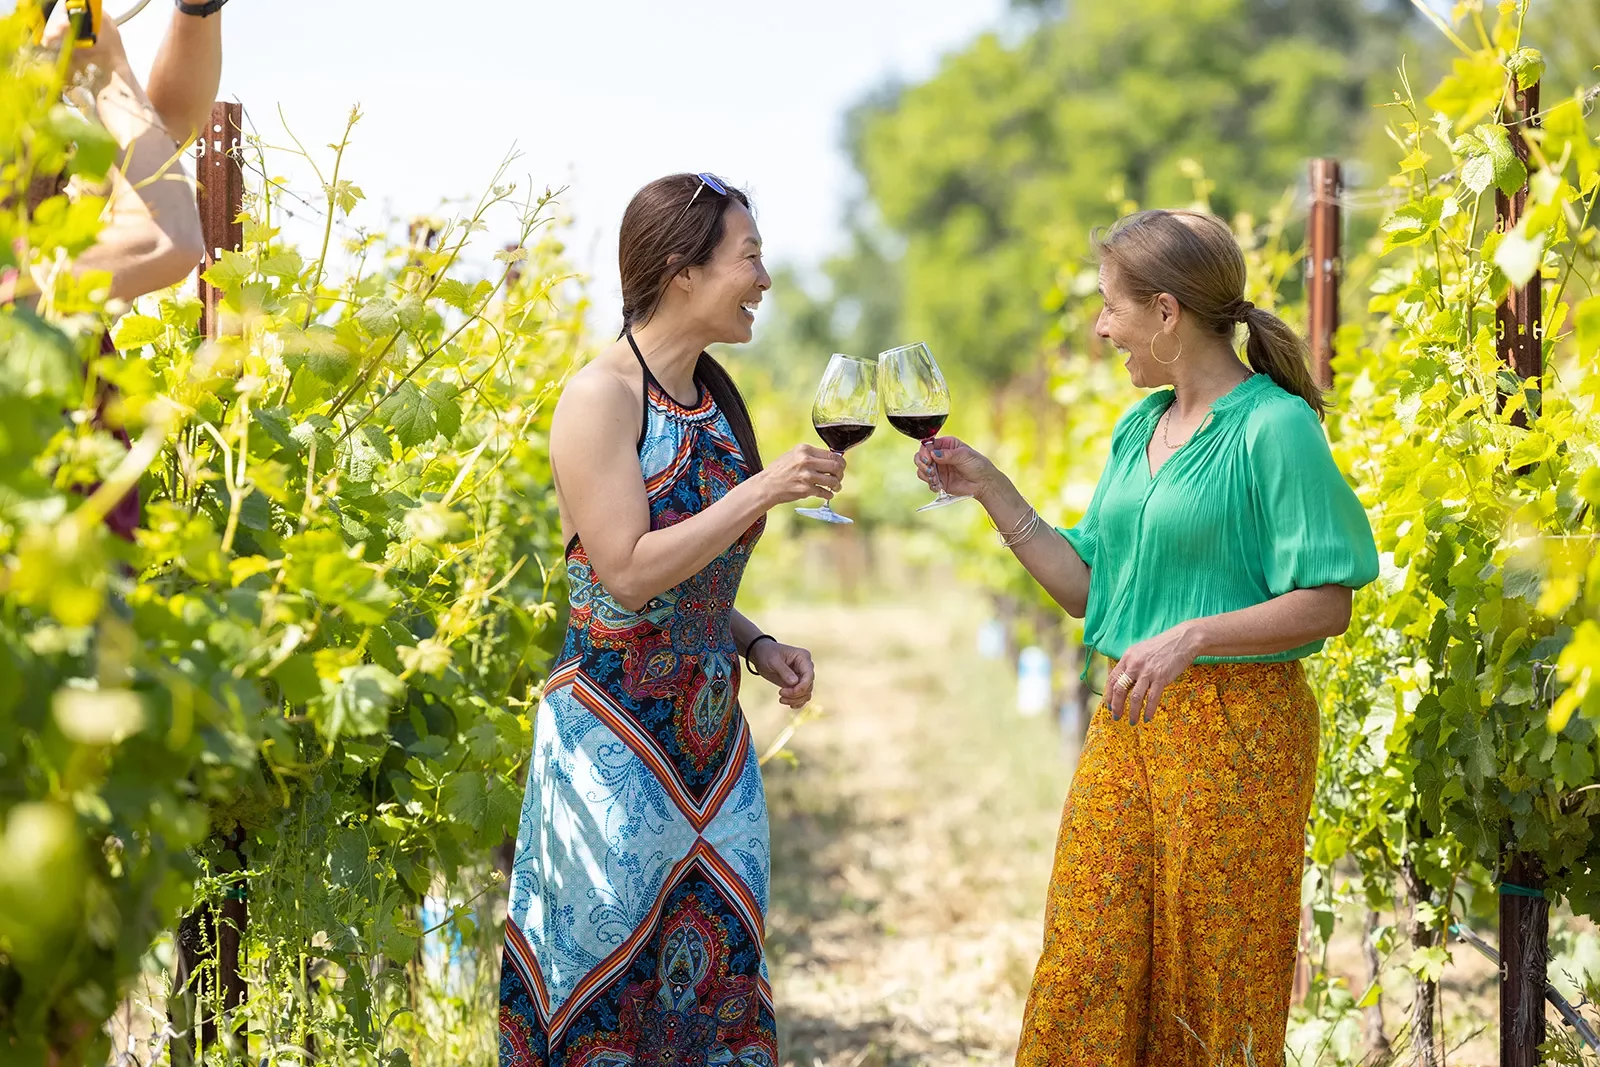 Two guests in vineyard, smiling, cheersing wine glasses.